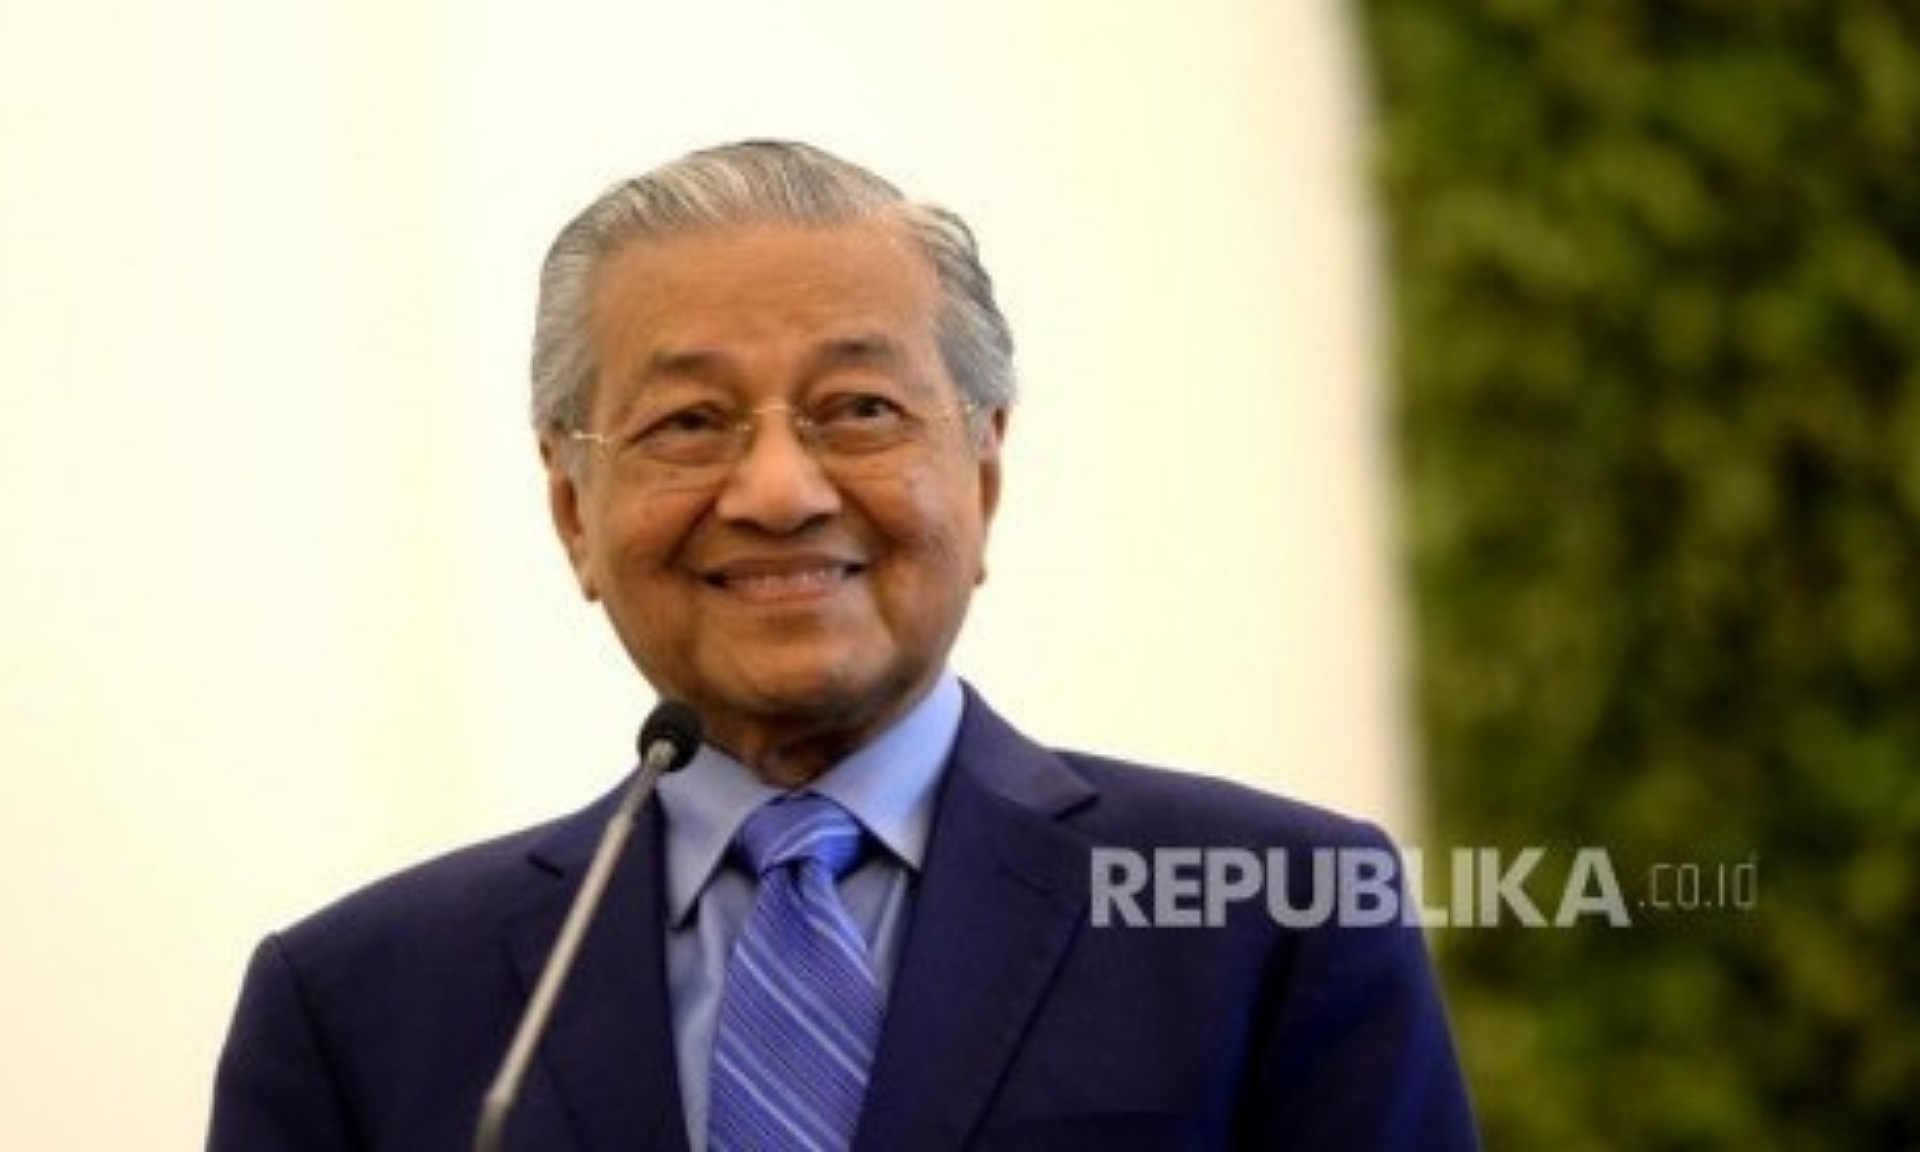 Mahathir Sarankan Pemimpin Hong Kong Mundur